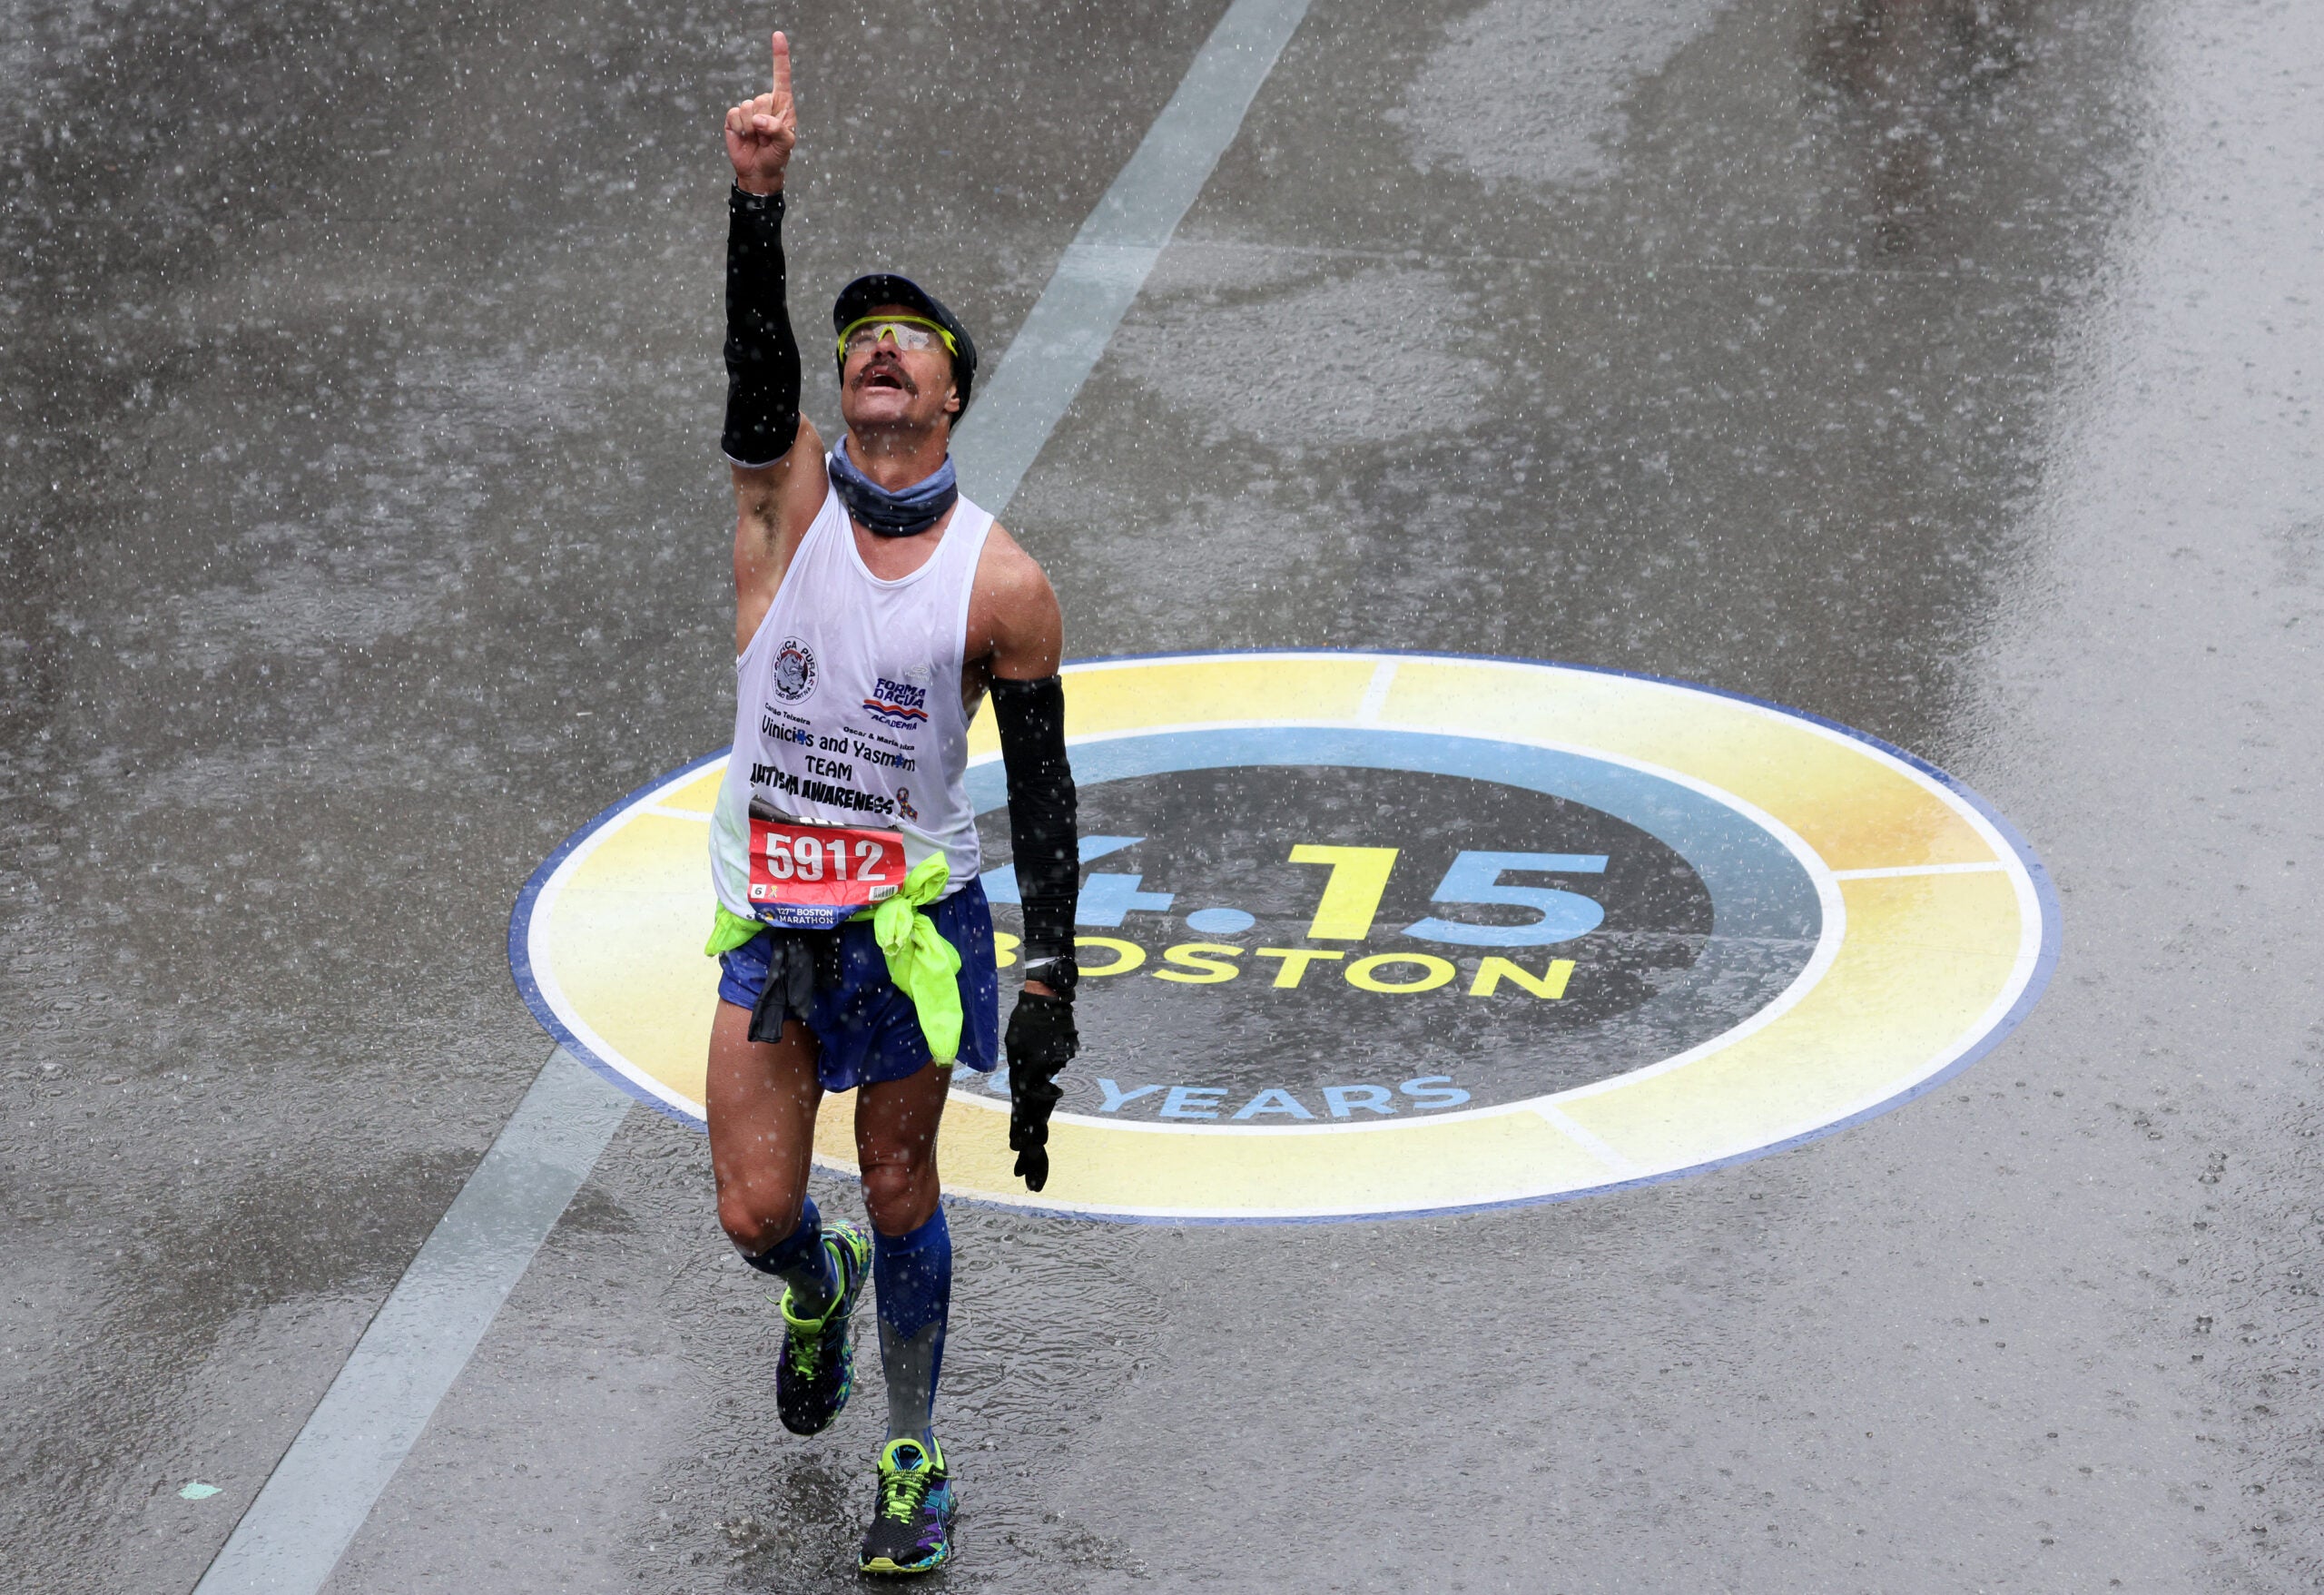 Fernando Ferreira celebrates after crossing the finish line as rain falls.